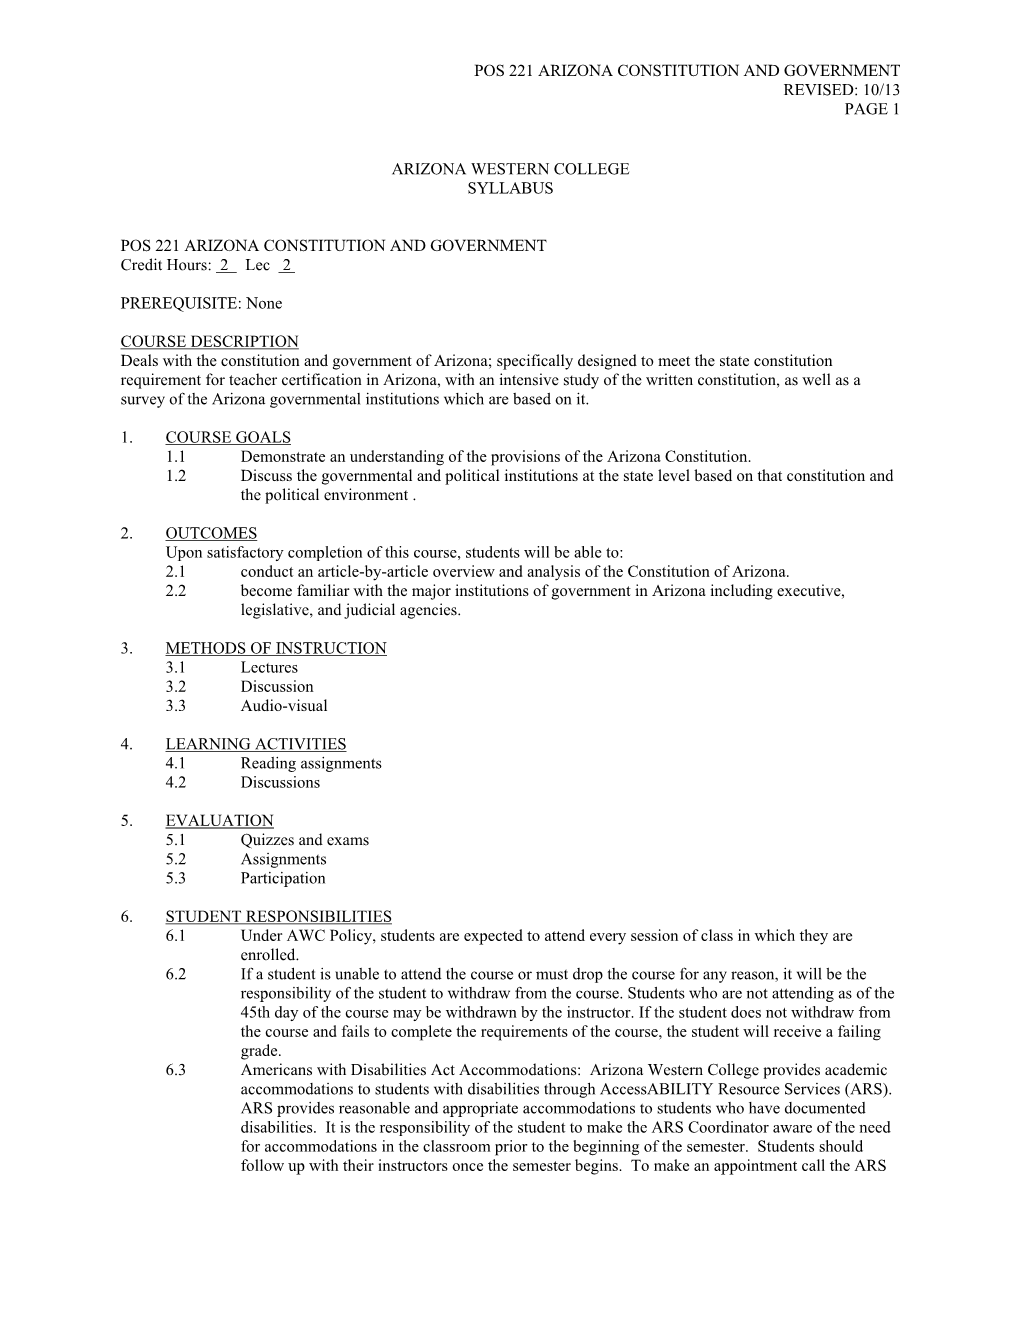 Pos 221 Arizona Constitution and Government Revised: 10/13 Page 1 Arizona Western College Syllabus Pos 221 Arizona Constituti